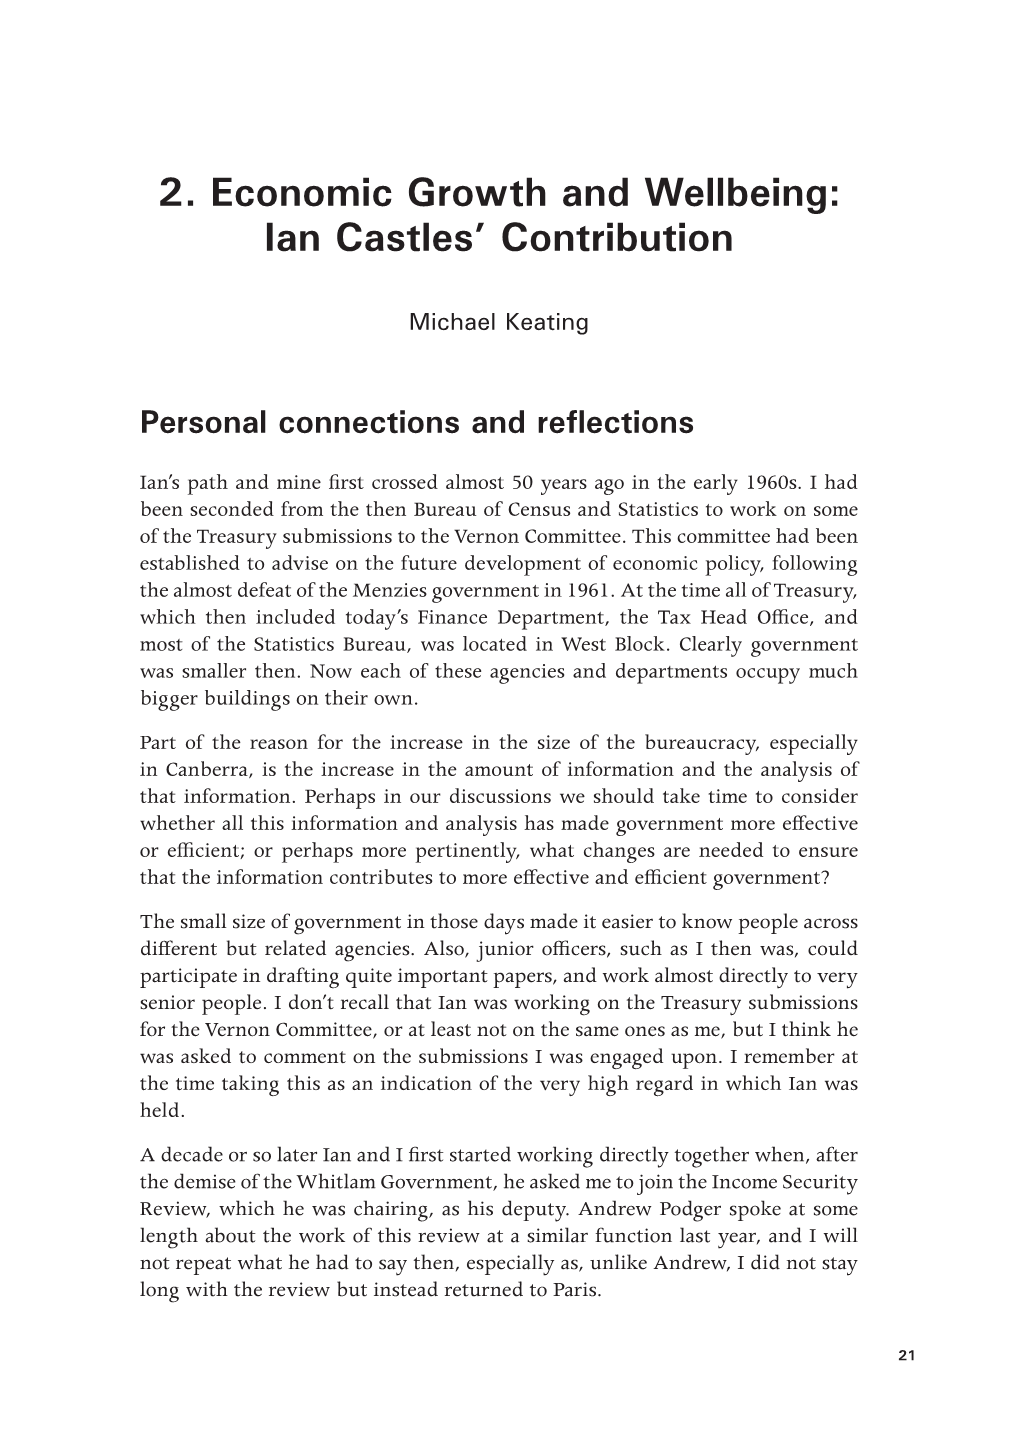 Ian Castles' Contribution